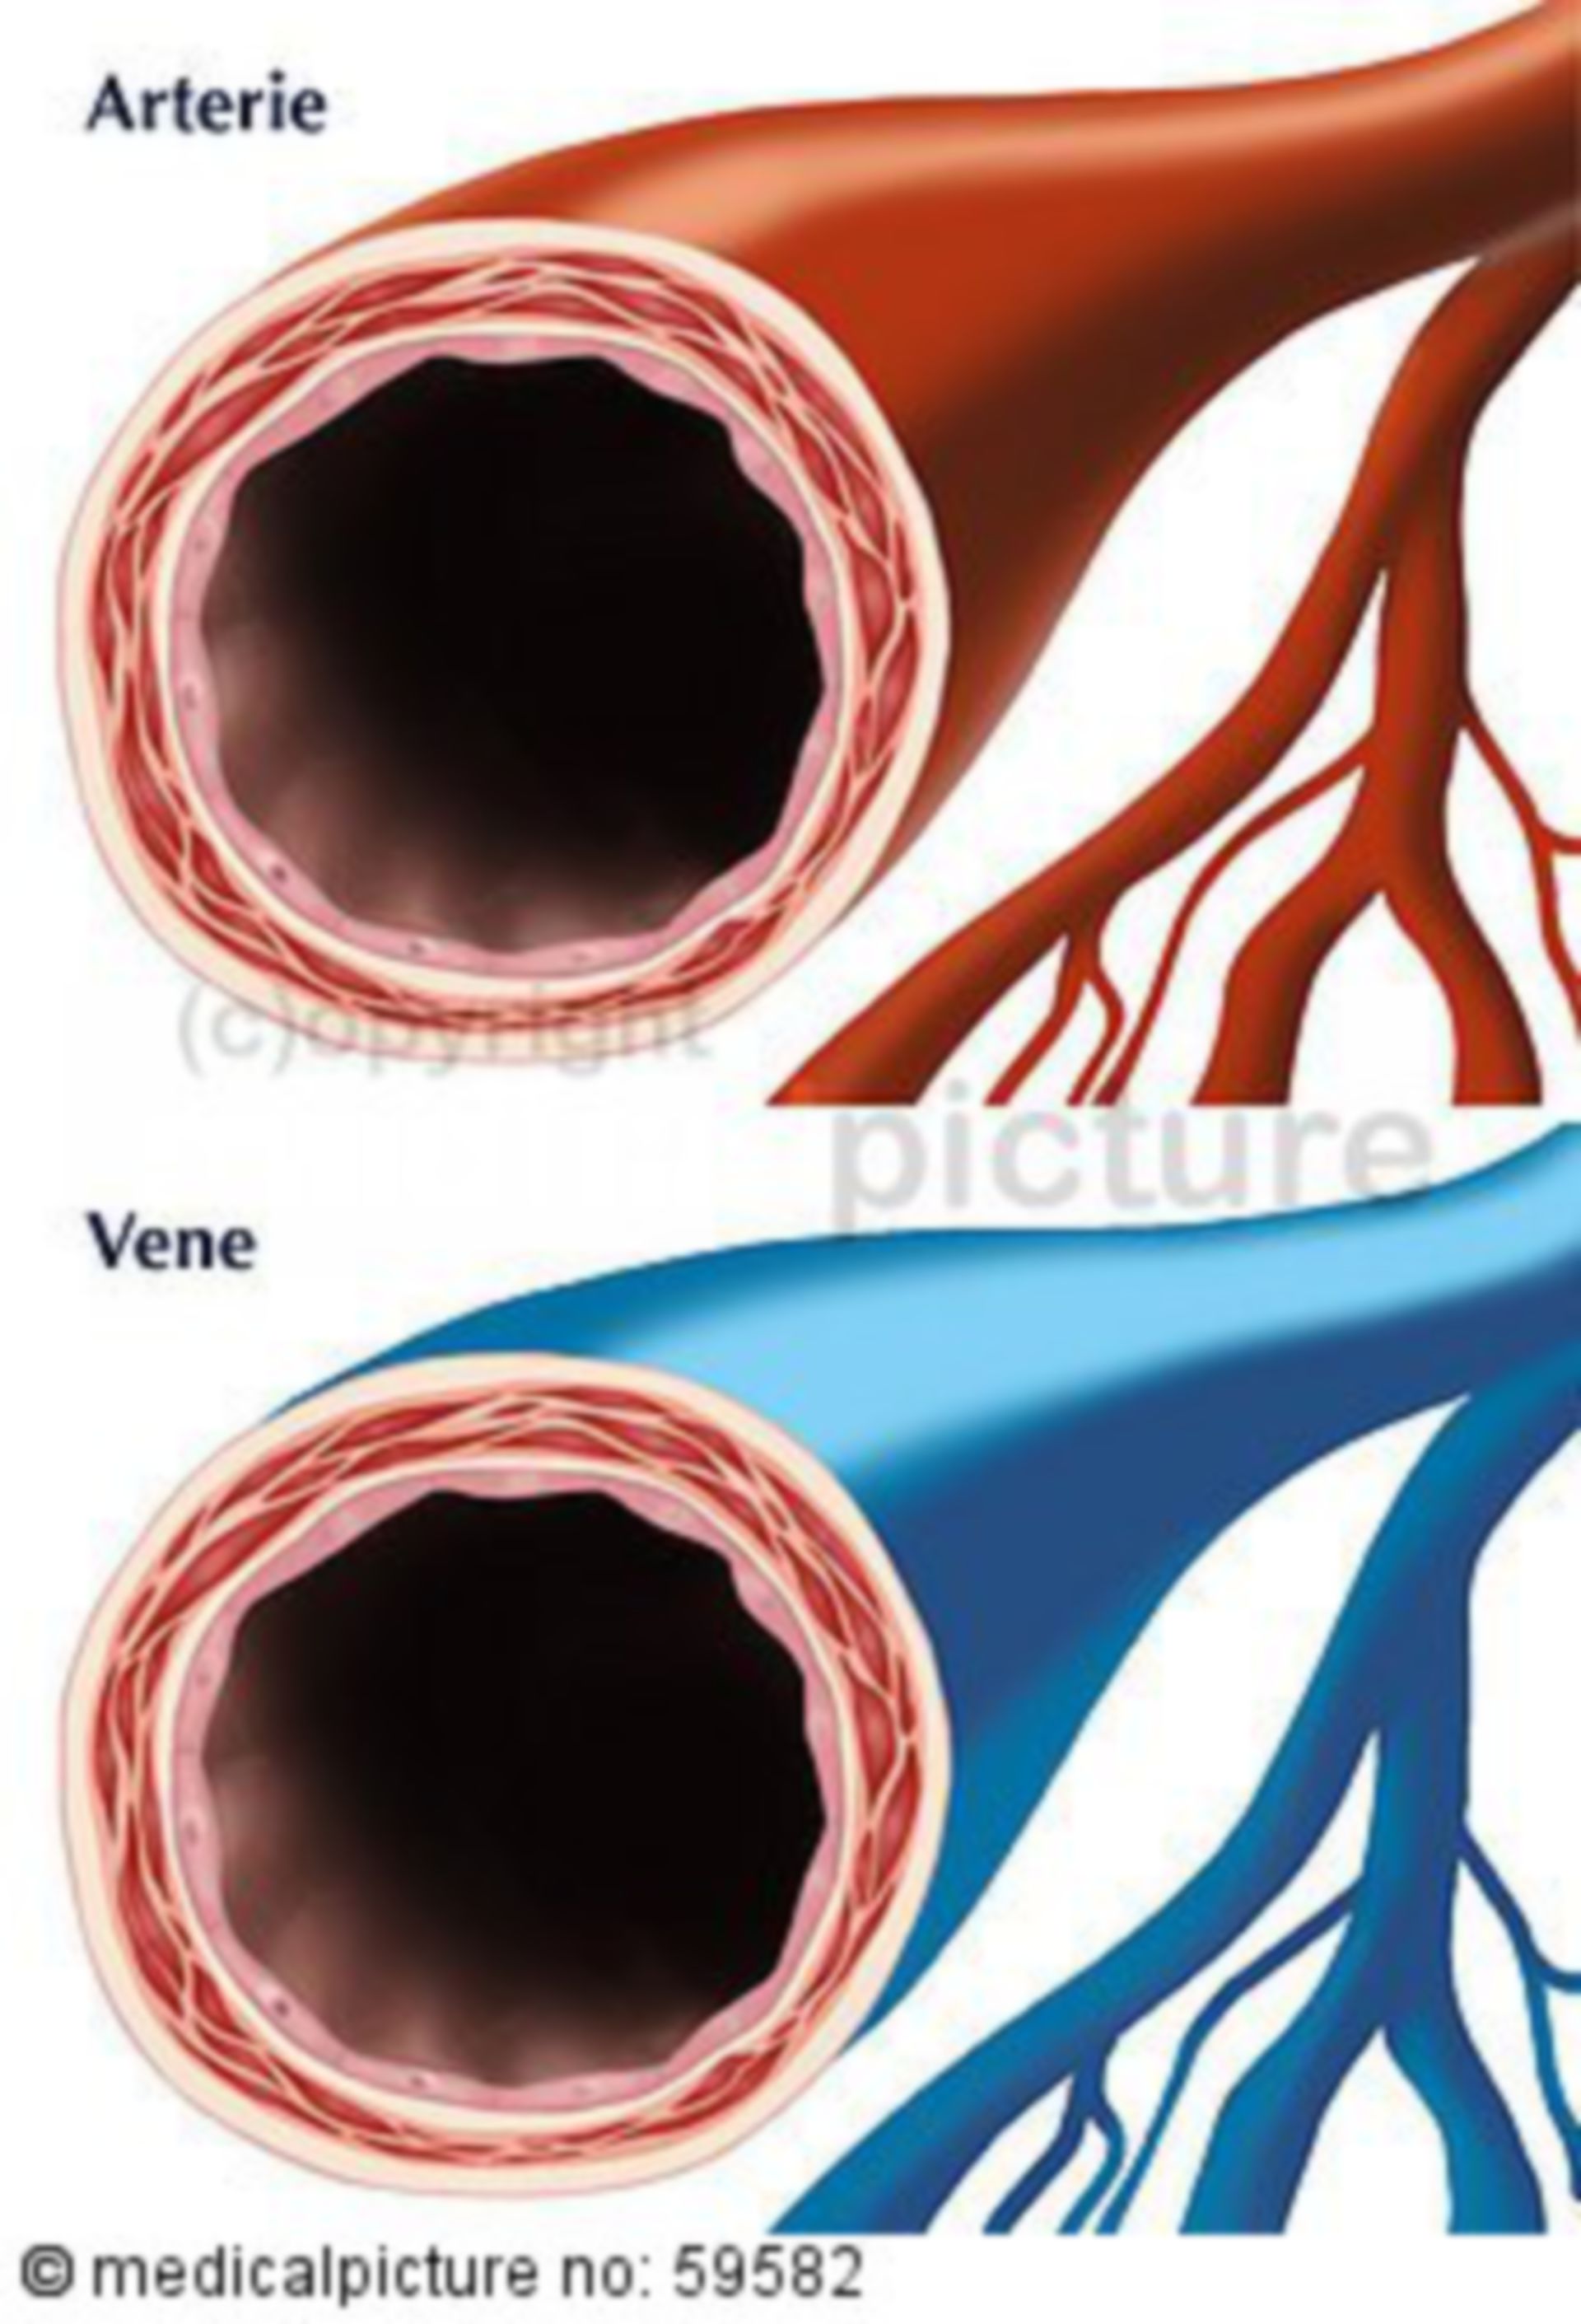  Arterie und Vene 
